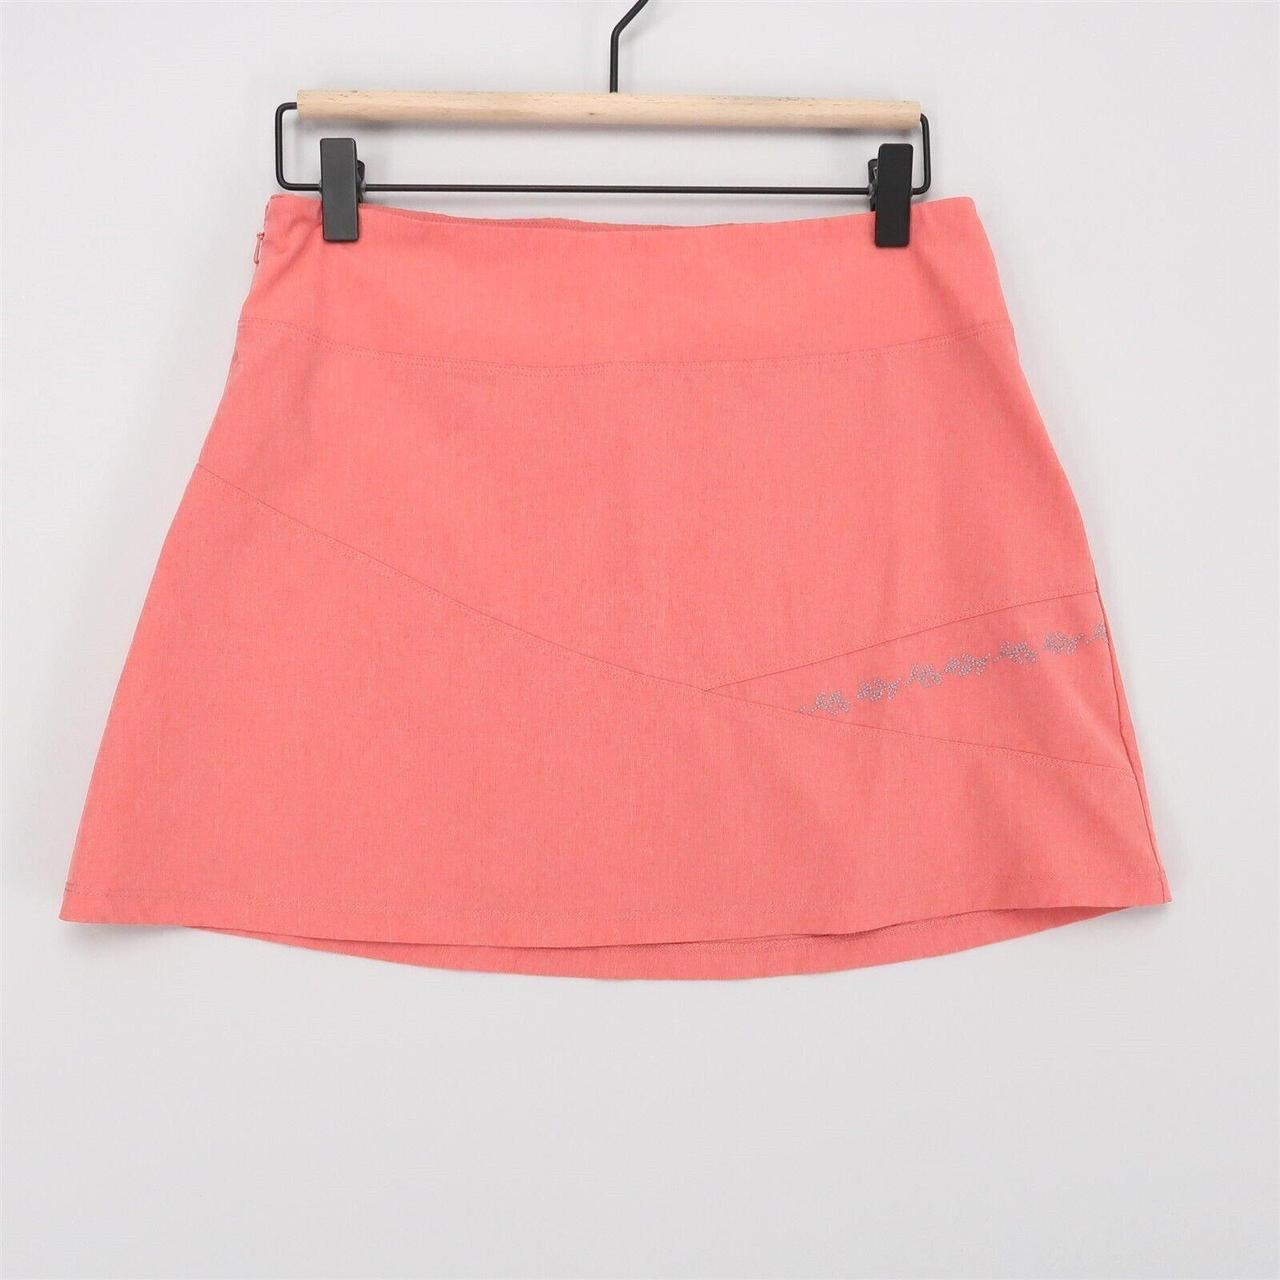 Fineside Women's Pink Skirt